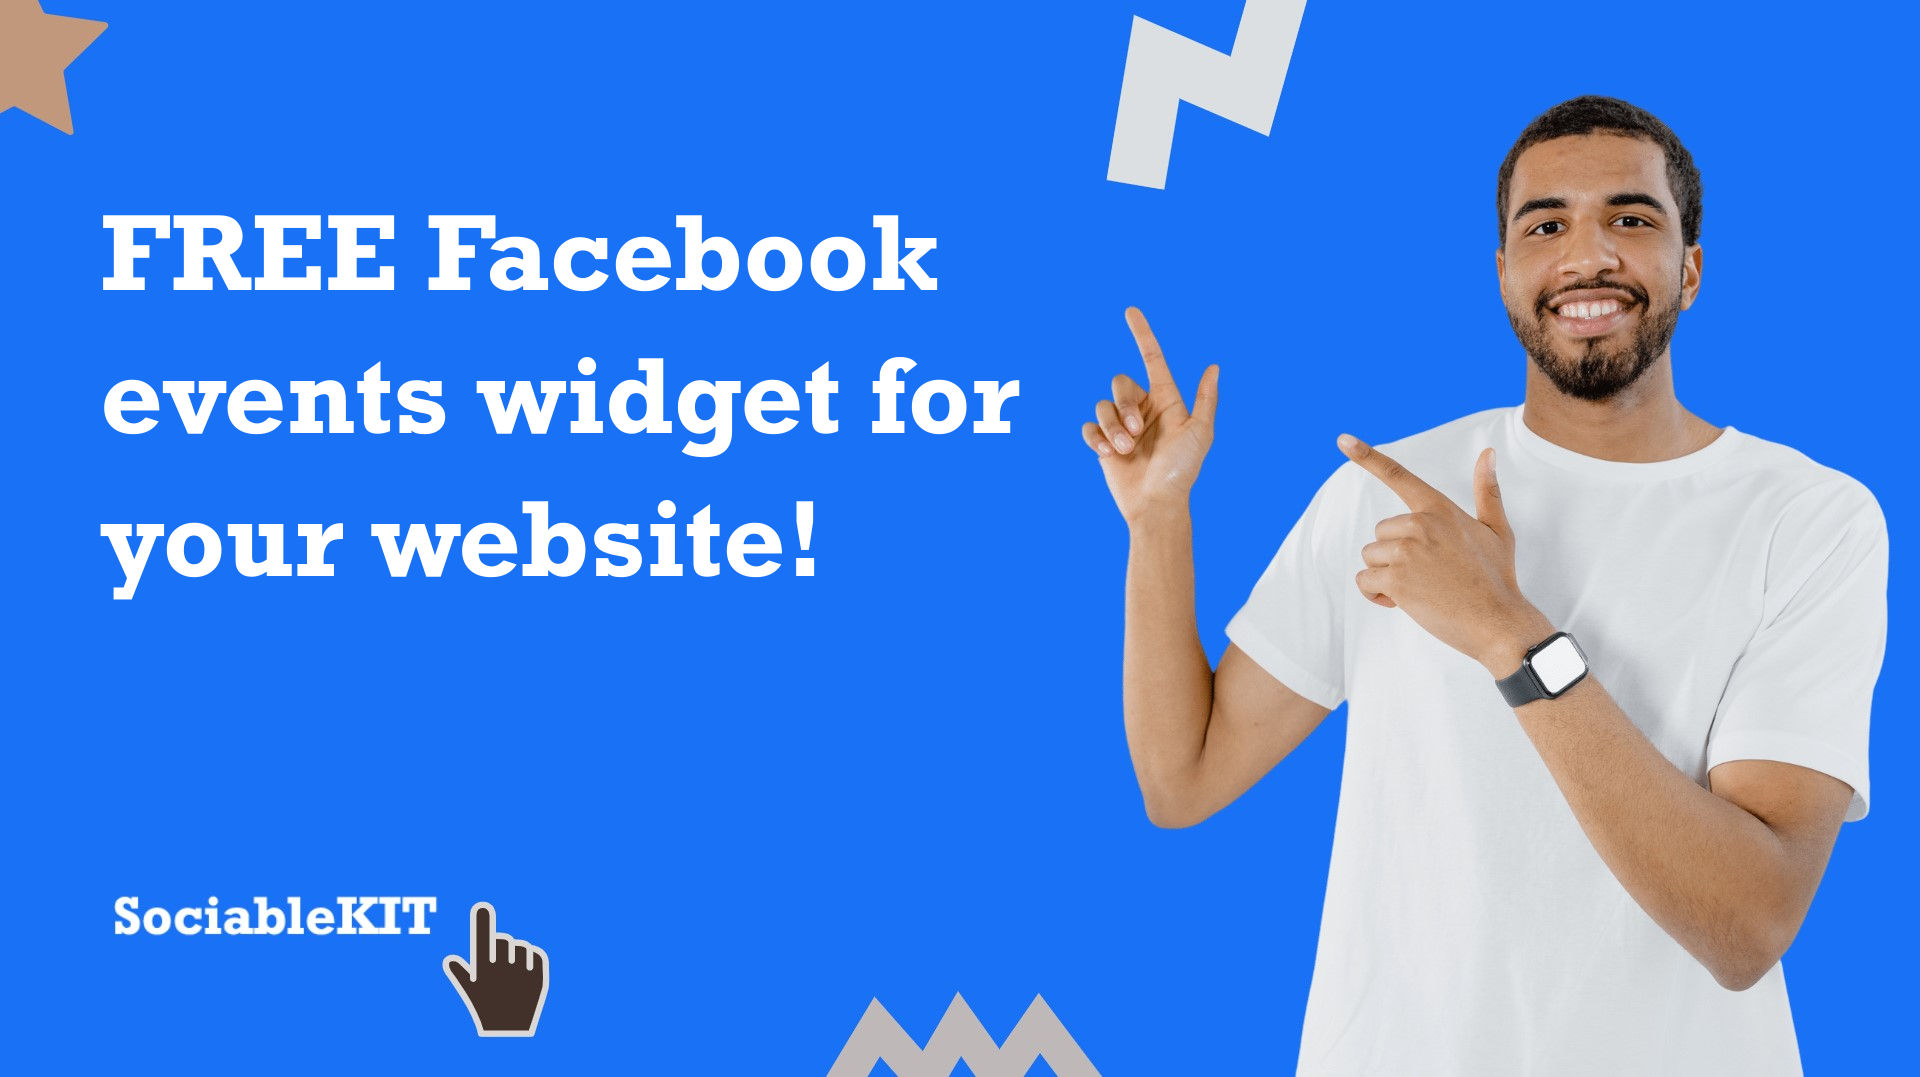 Free Facebook events widget for your website